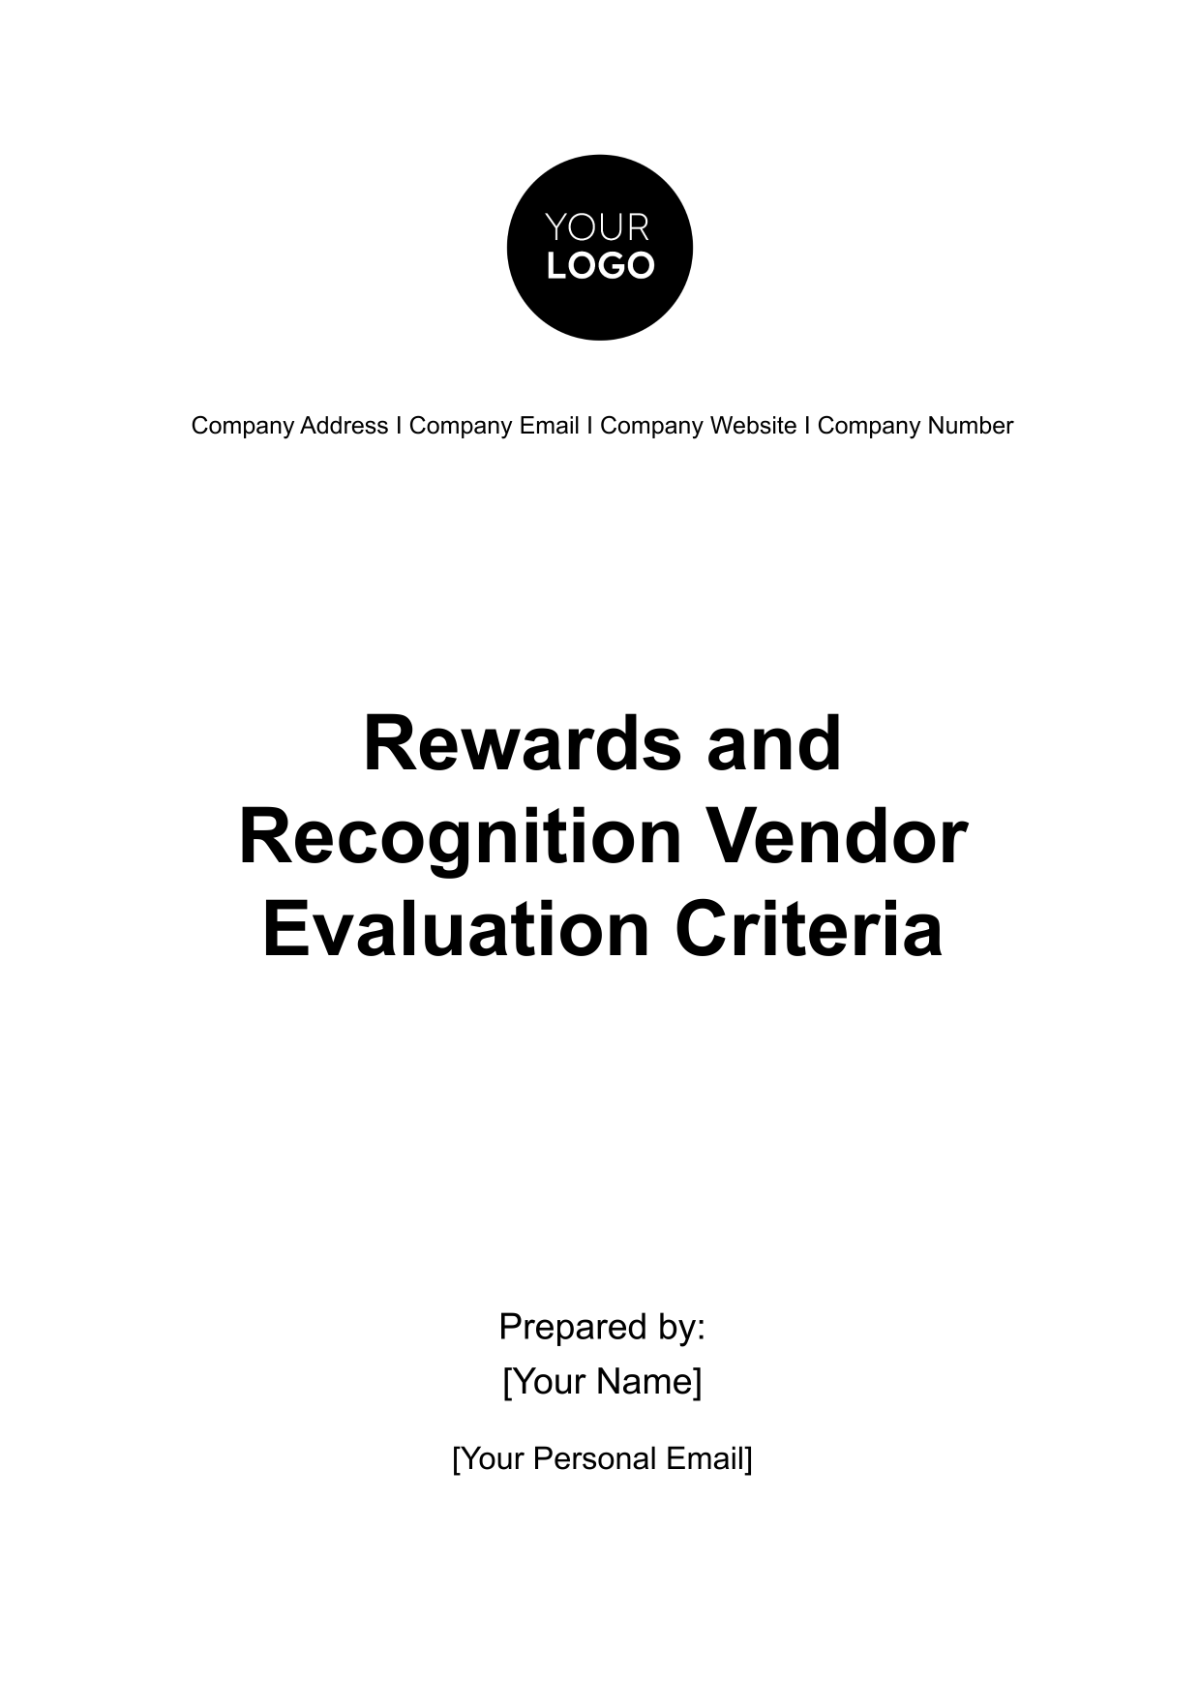 Rewards and Recognition Vendor Evaluation Criteria HR Template